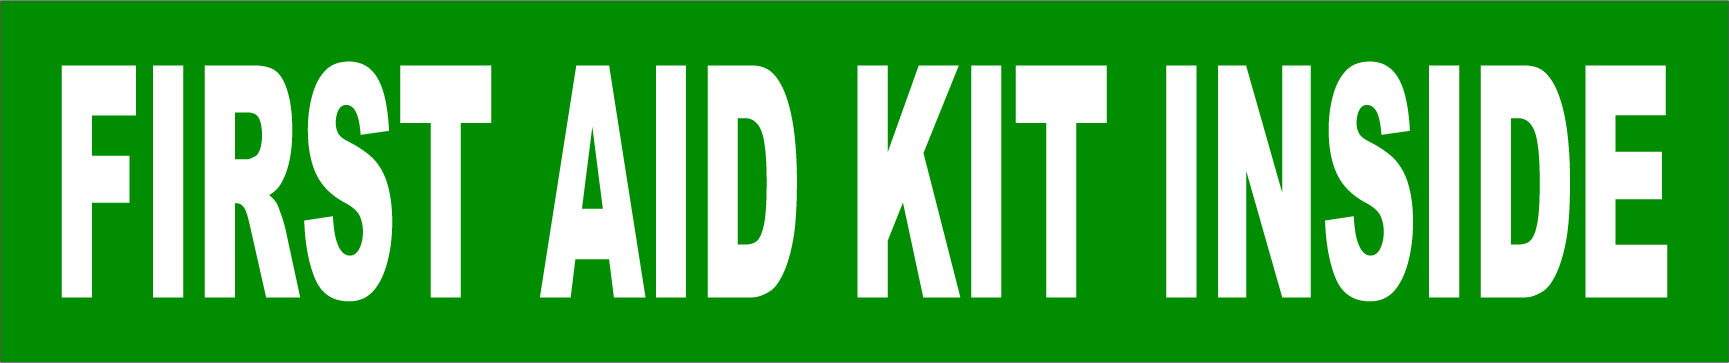 First Aid Kit Inside Sticker